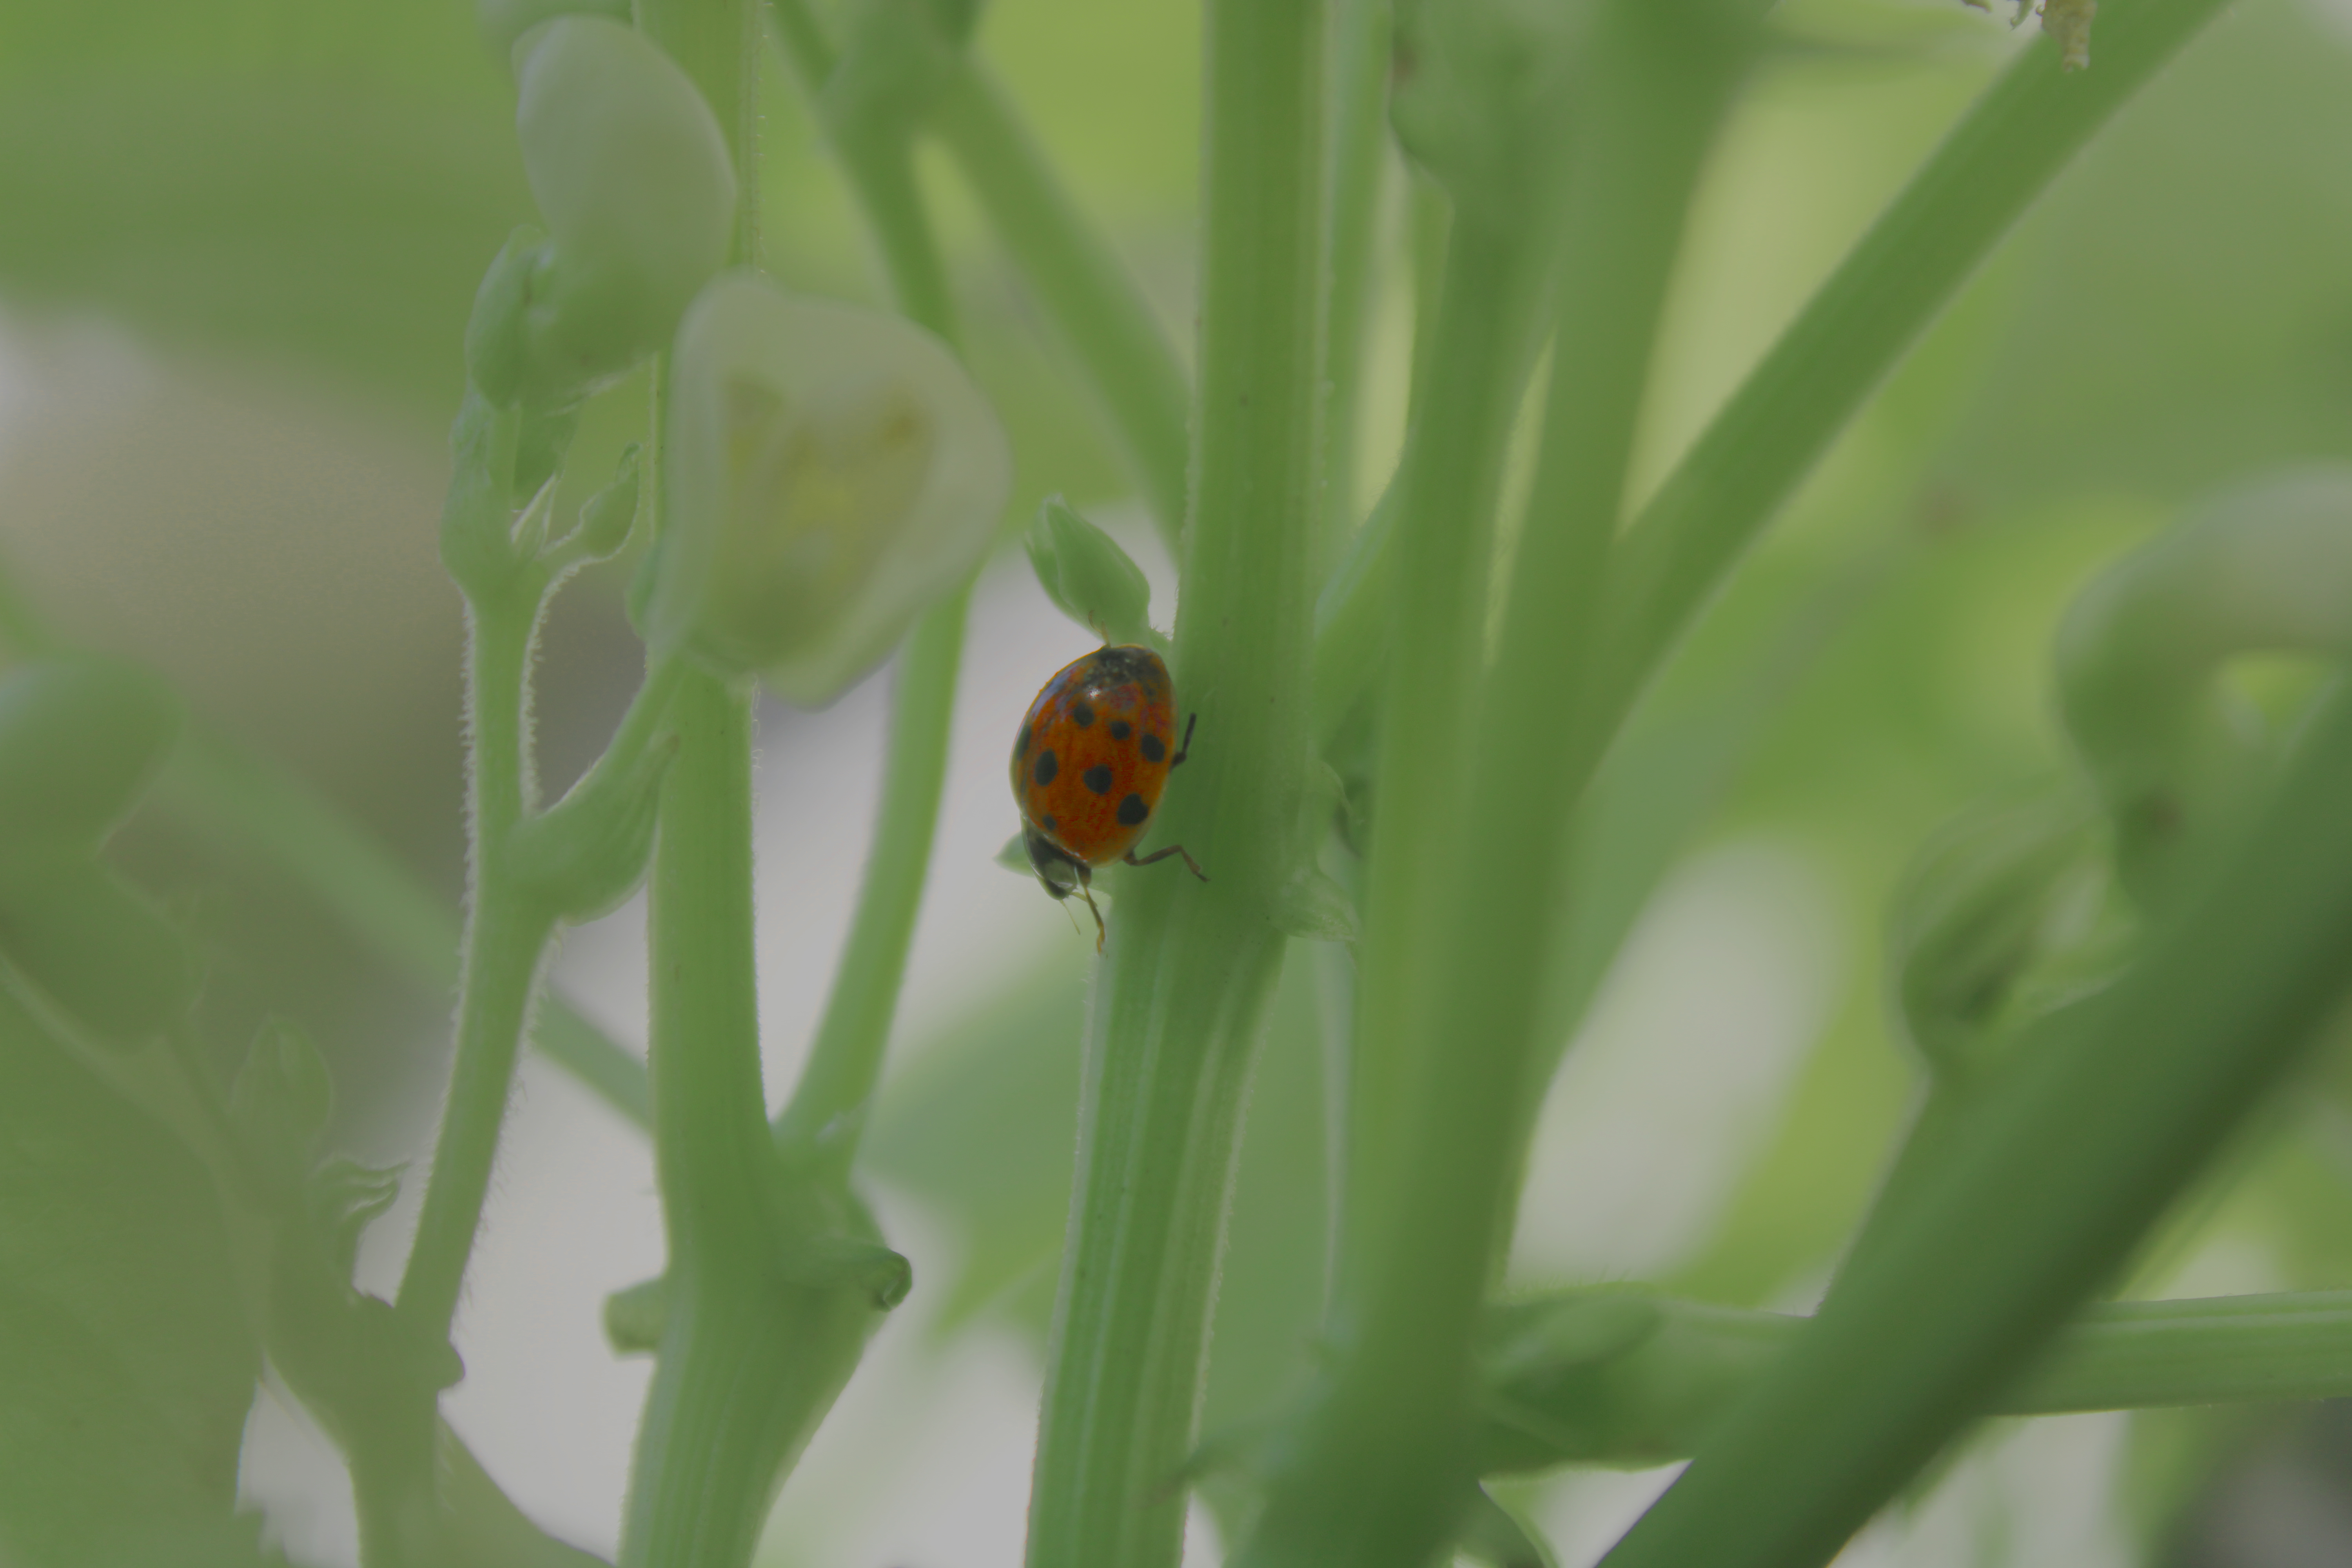 A Lady bug climbing a pea stem